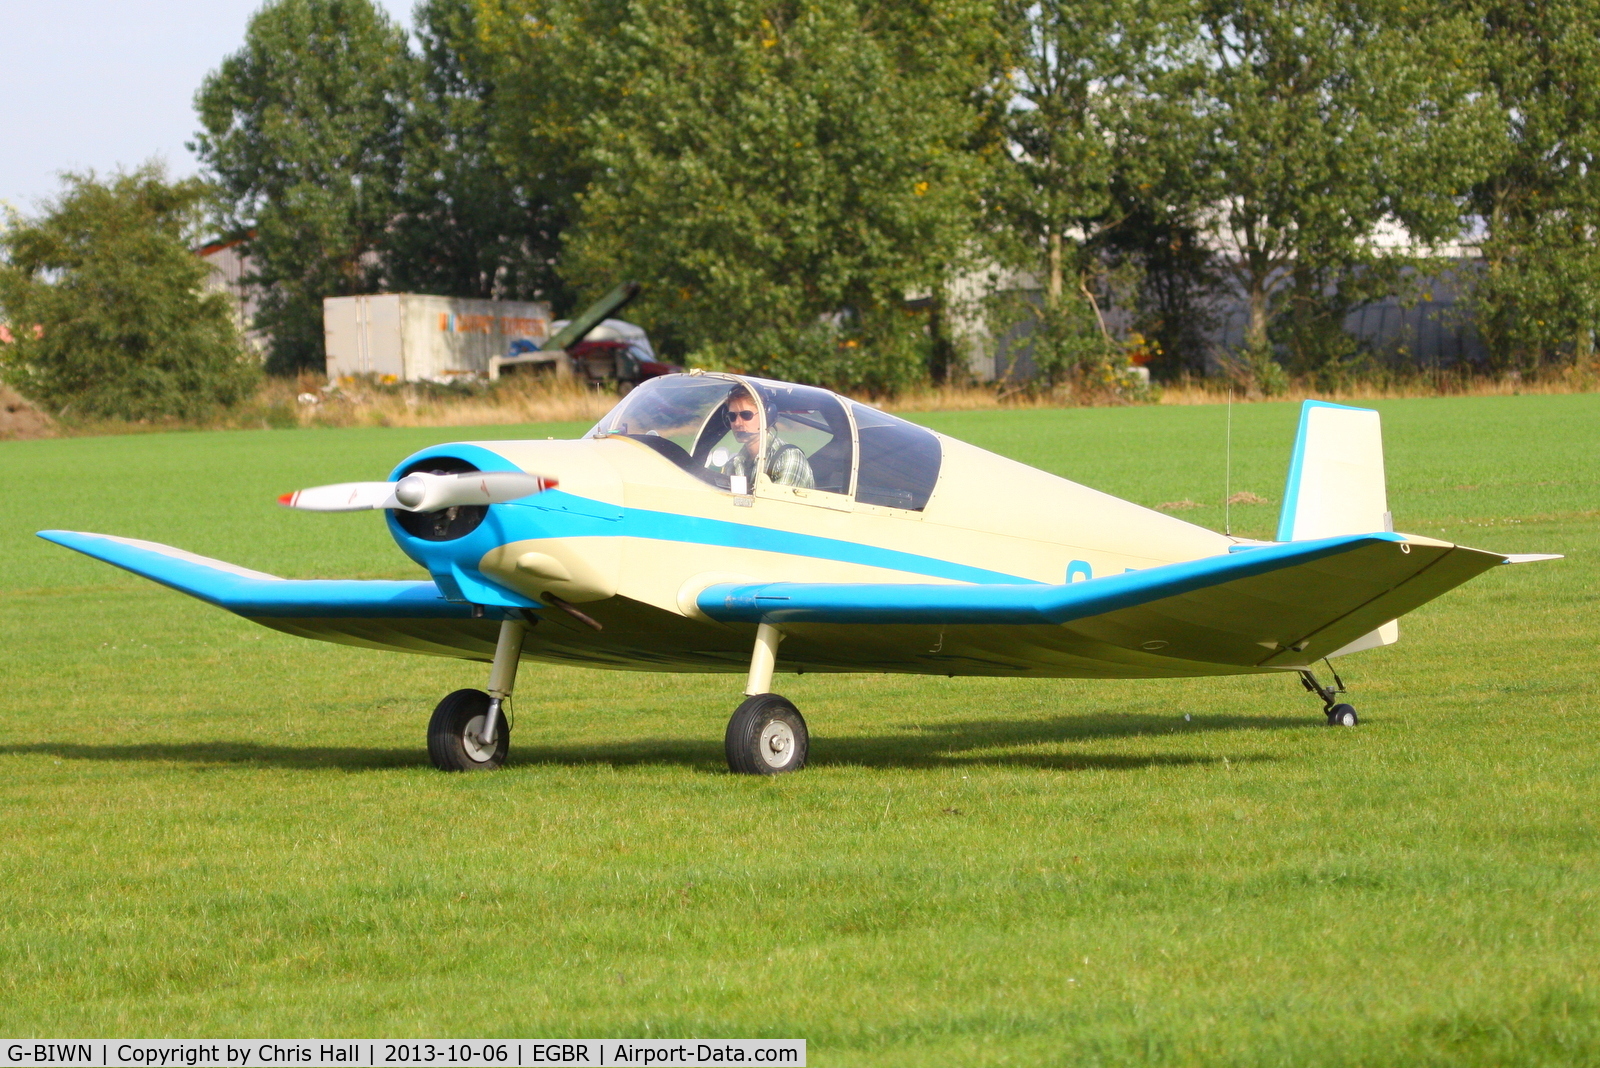 G-BIWN, 1966 Jodel D-112 C/N 1314, at Breighton's Pre Hibernation Fly-in, 2013